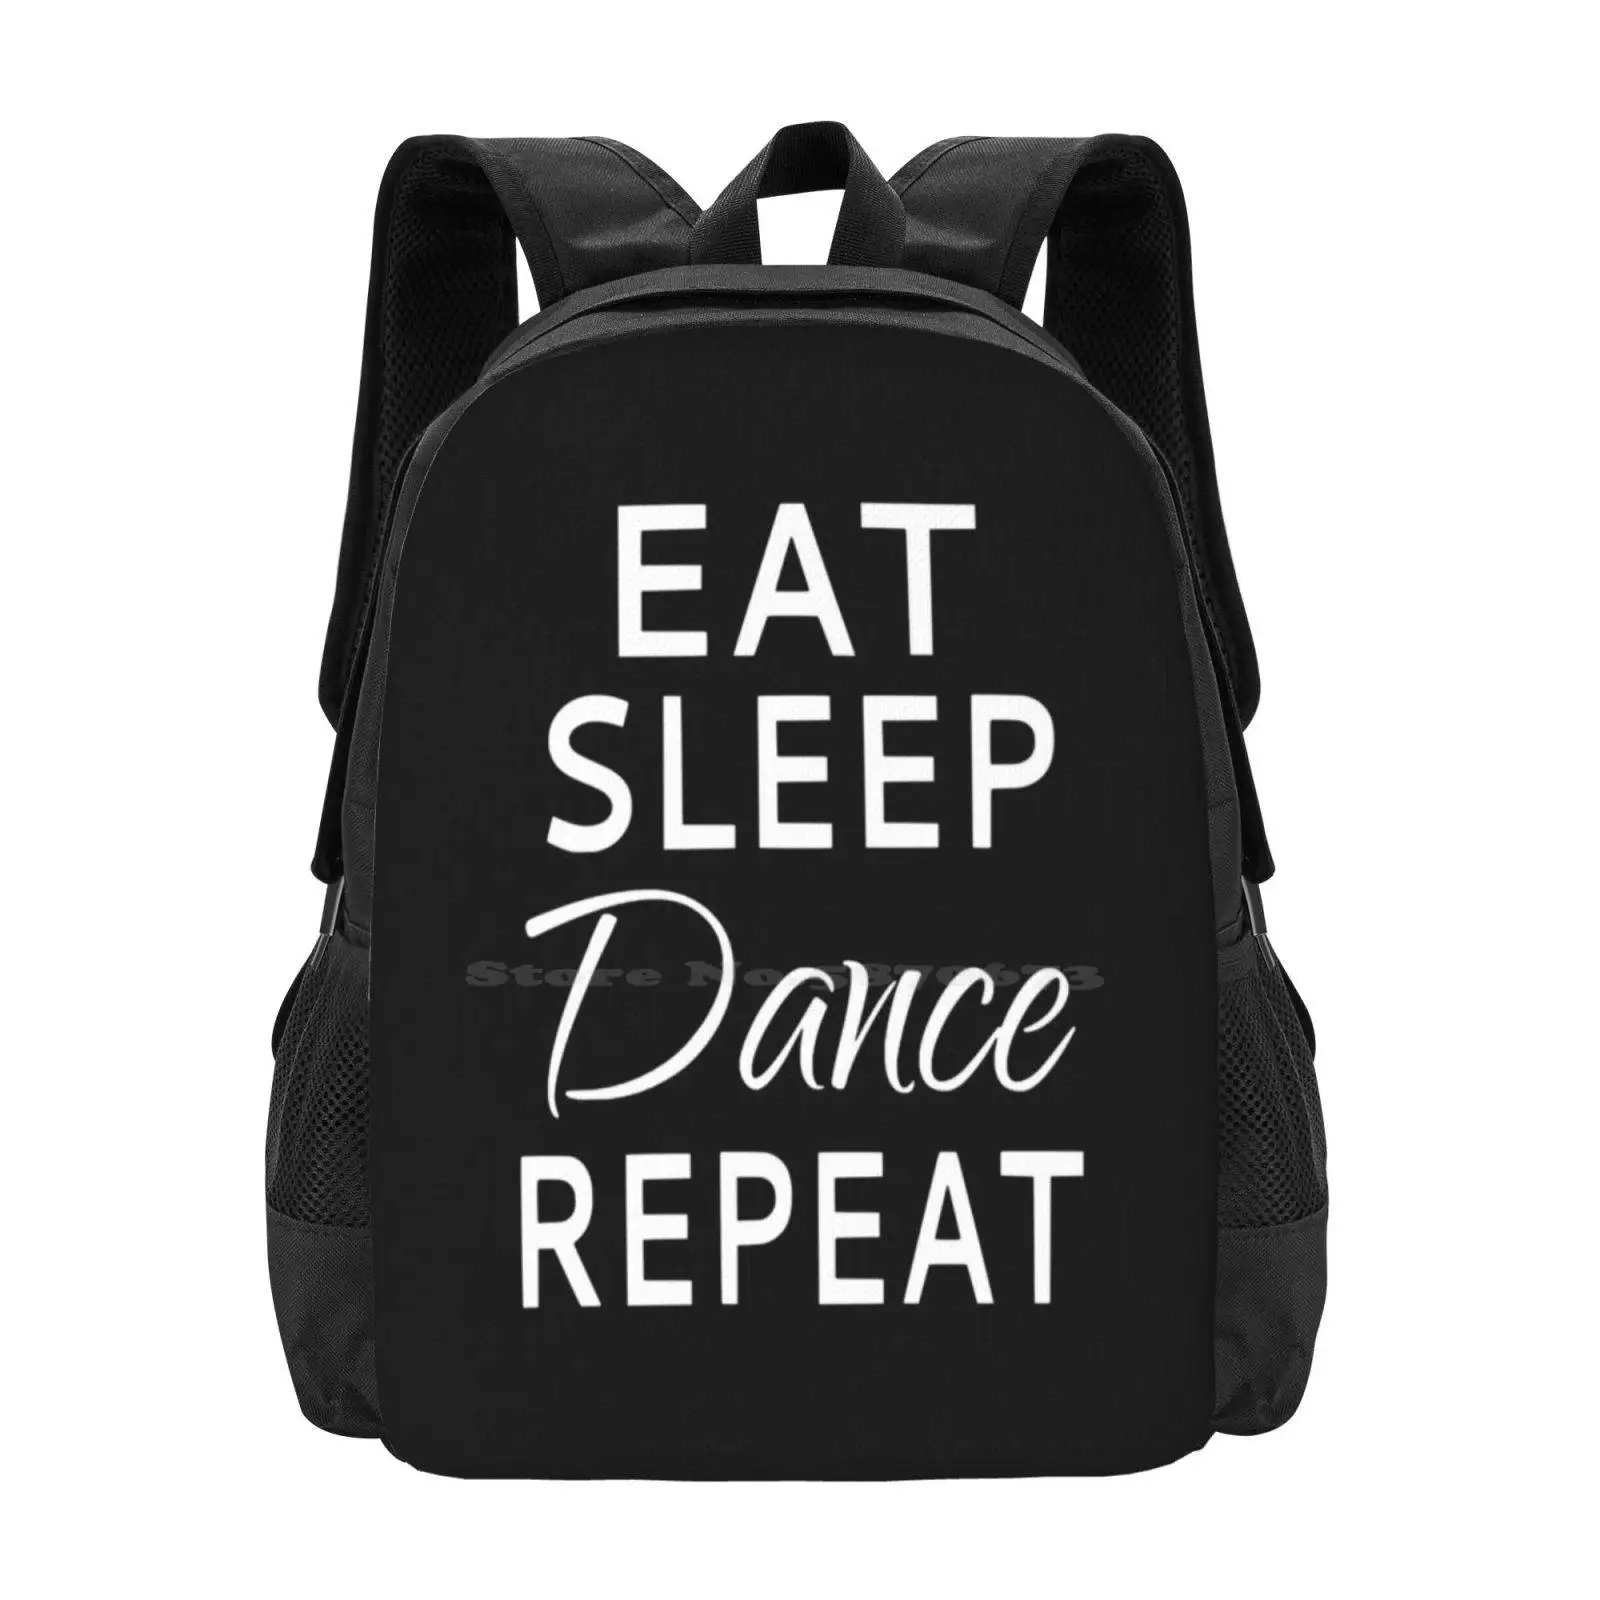 

Eat Sleep Dance Repeat New Arrivals Unisex Bags Student Bag Backpack Sleep Repeat Dancing Dancers Ballet Hip Hop Jazz Tap